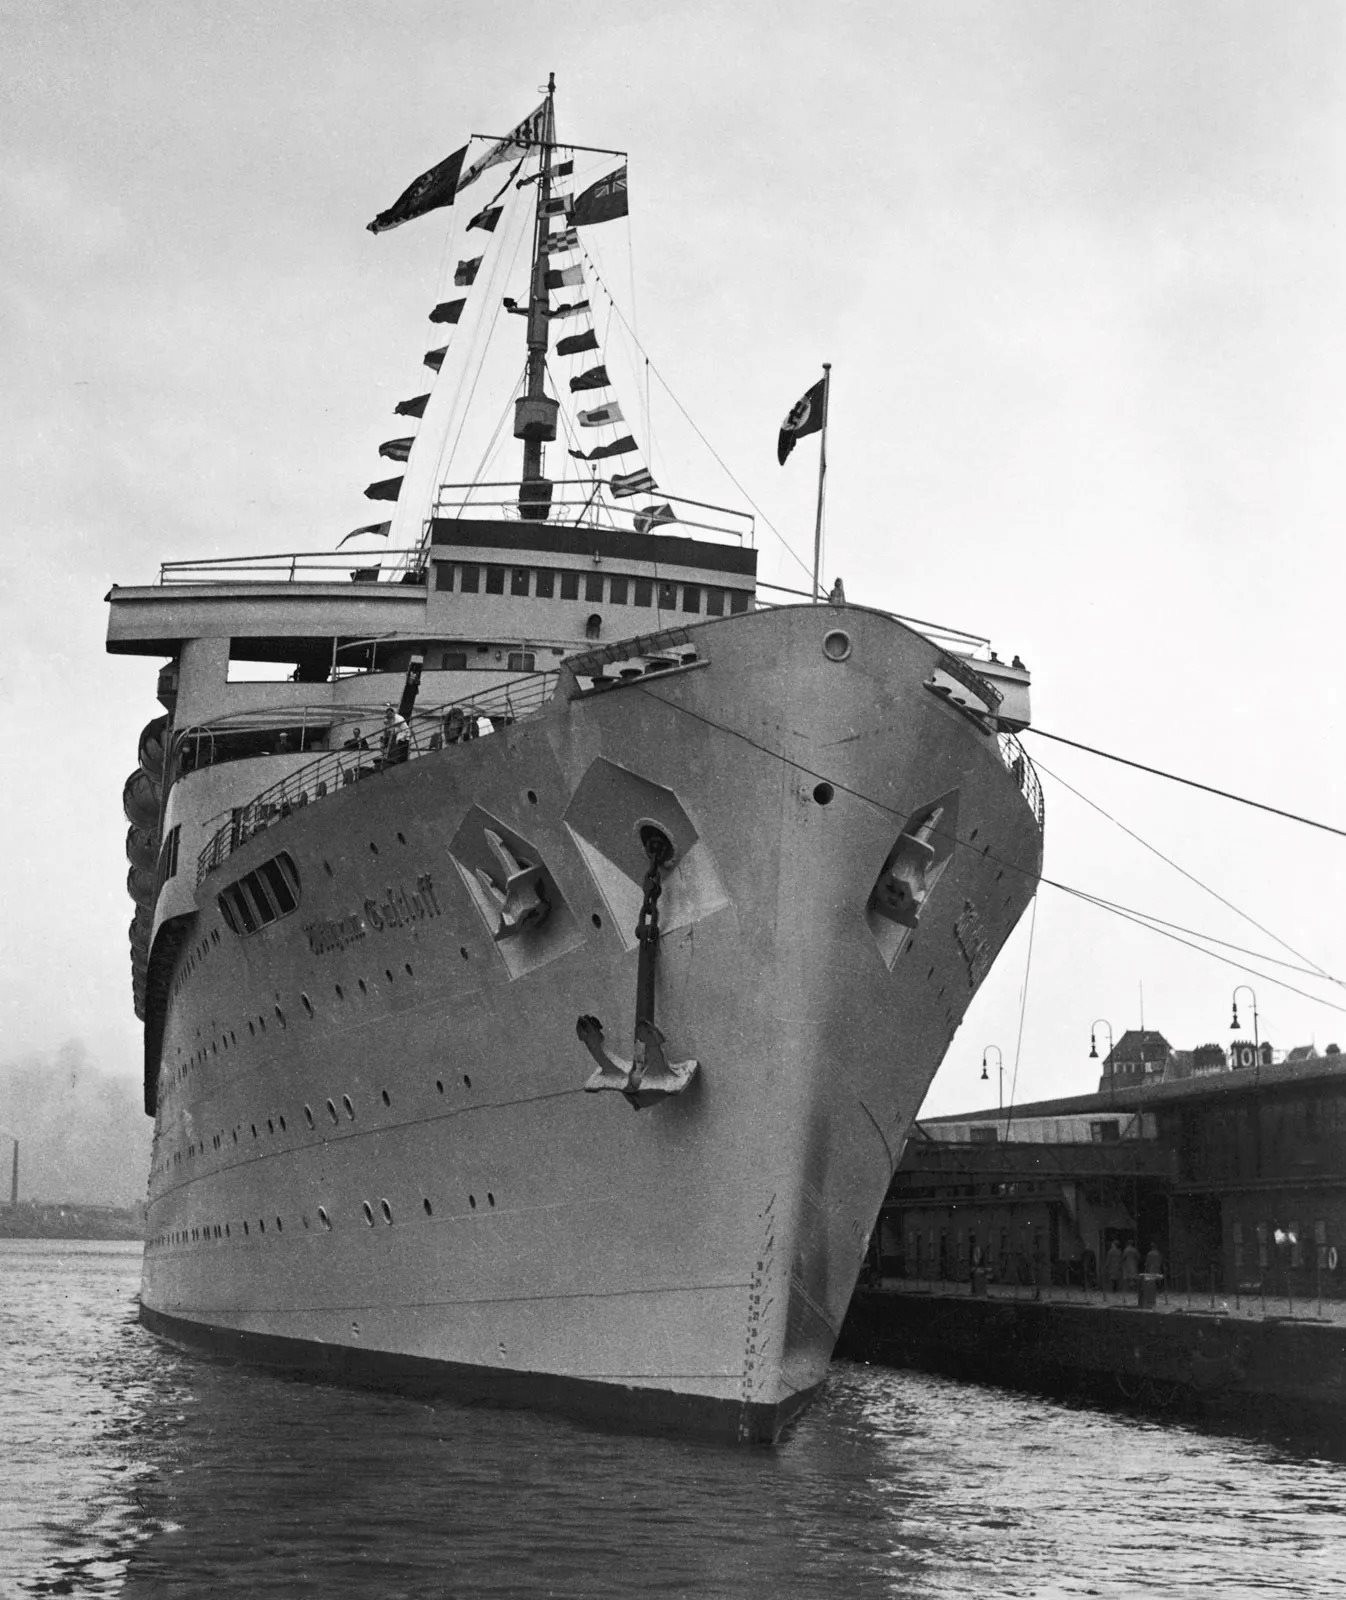 mv-wilhelm-gustloff-docked-tilbury-england-april-10-1938_11zon-1-.jpg